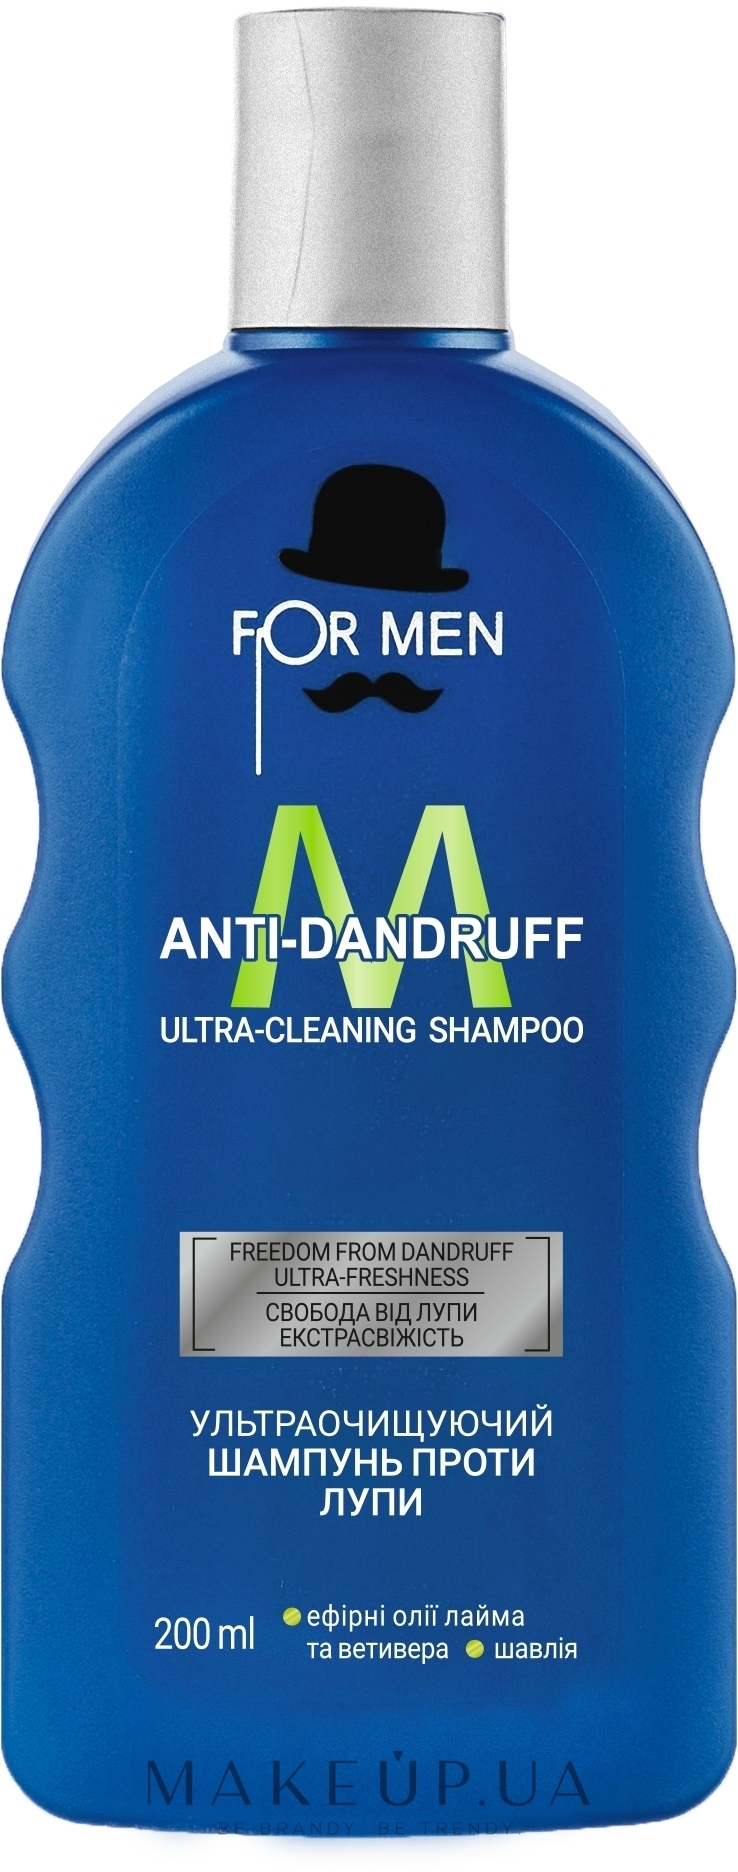 Шампунь проти лупи - For Men Anti-Dandruff Shampoo — фото 200ml